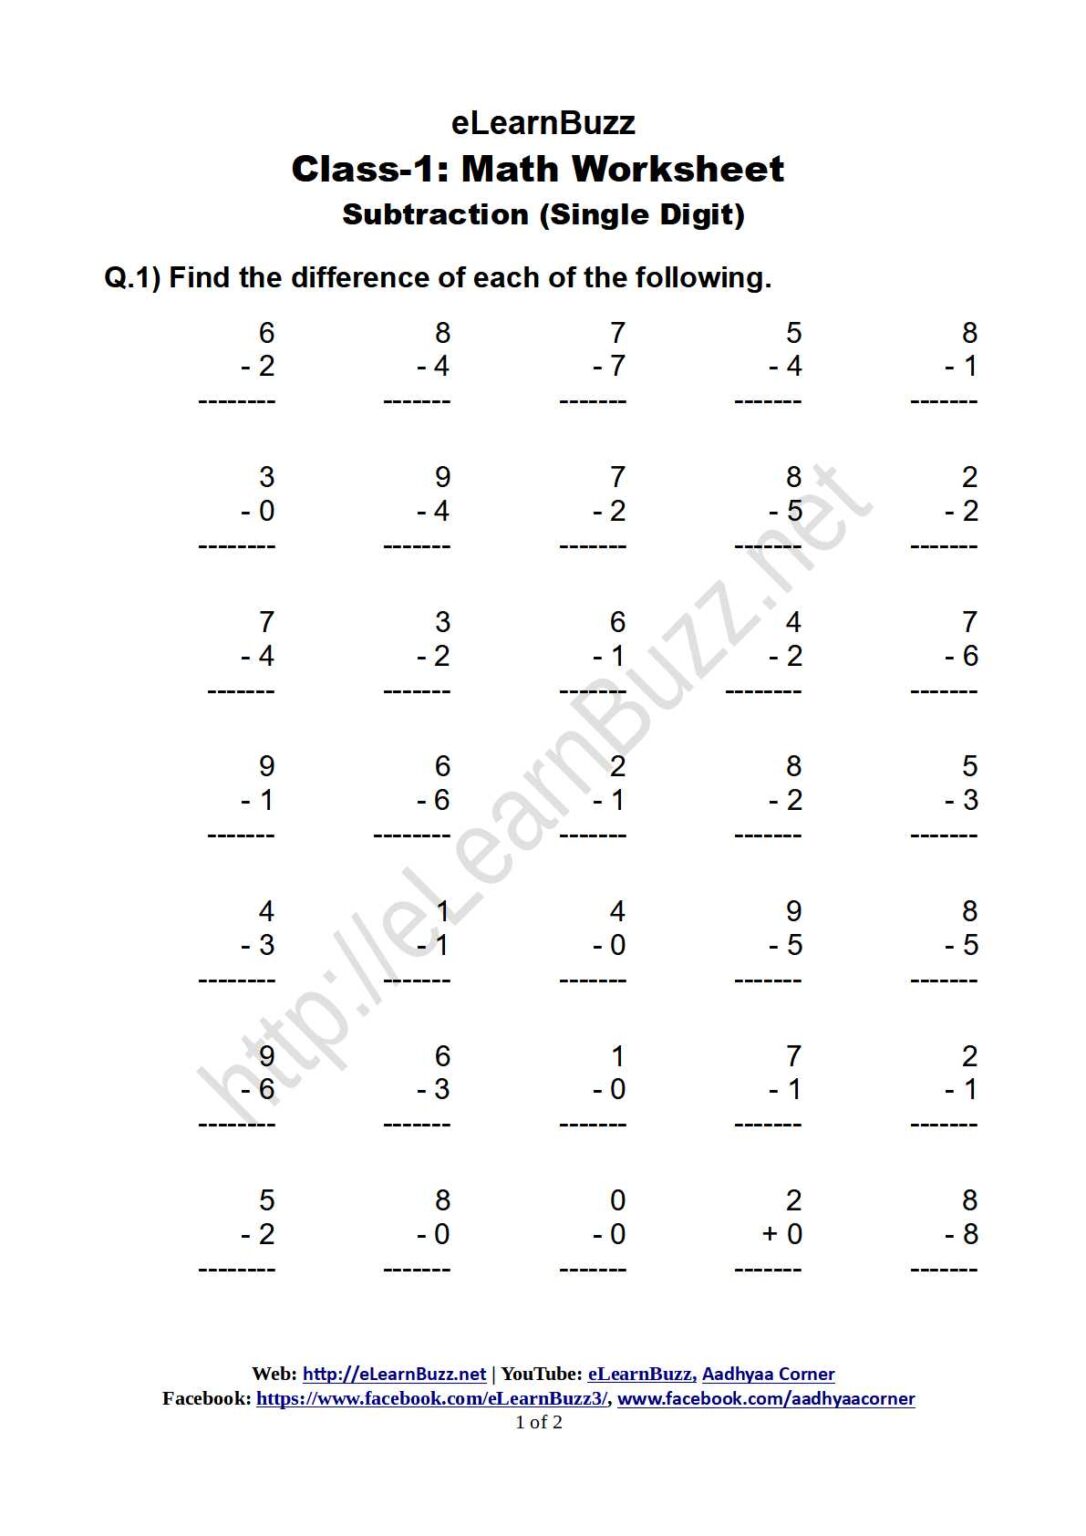 single digit subtraction worksheet for class 1 elearnbuzz